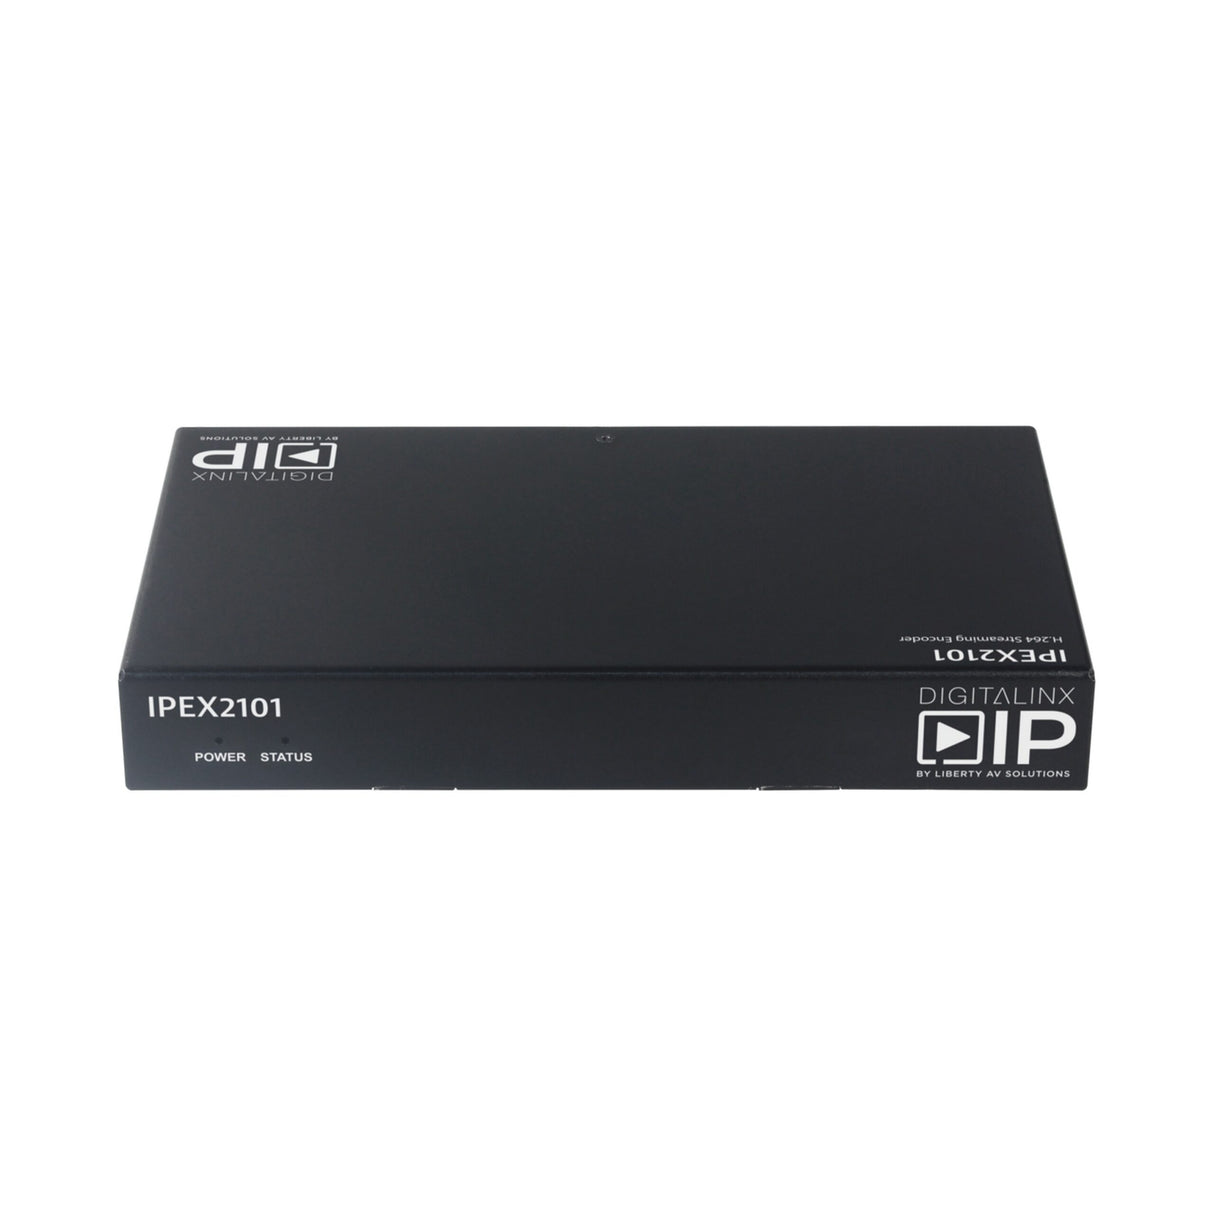 Digitalinx IPEX2101 H.264 HDMI/IP Encoder with PoE